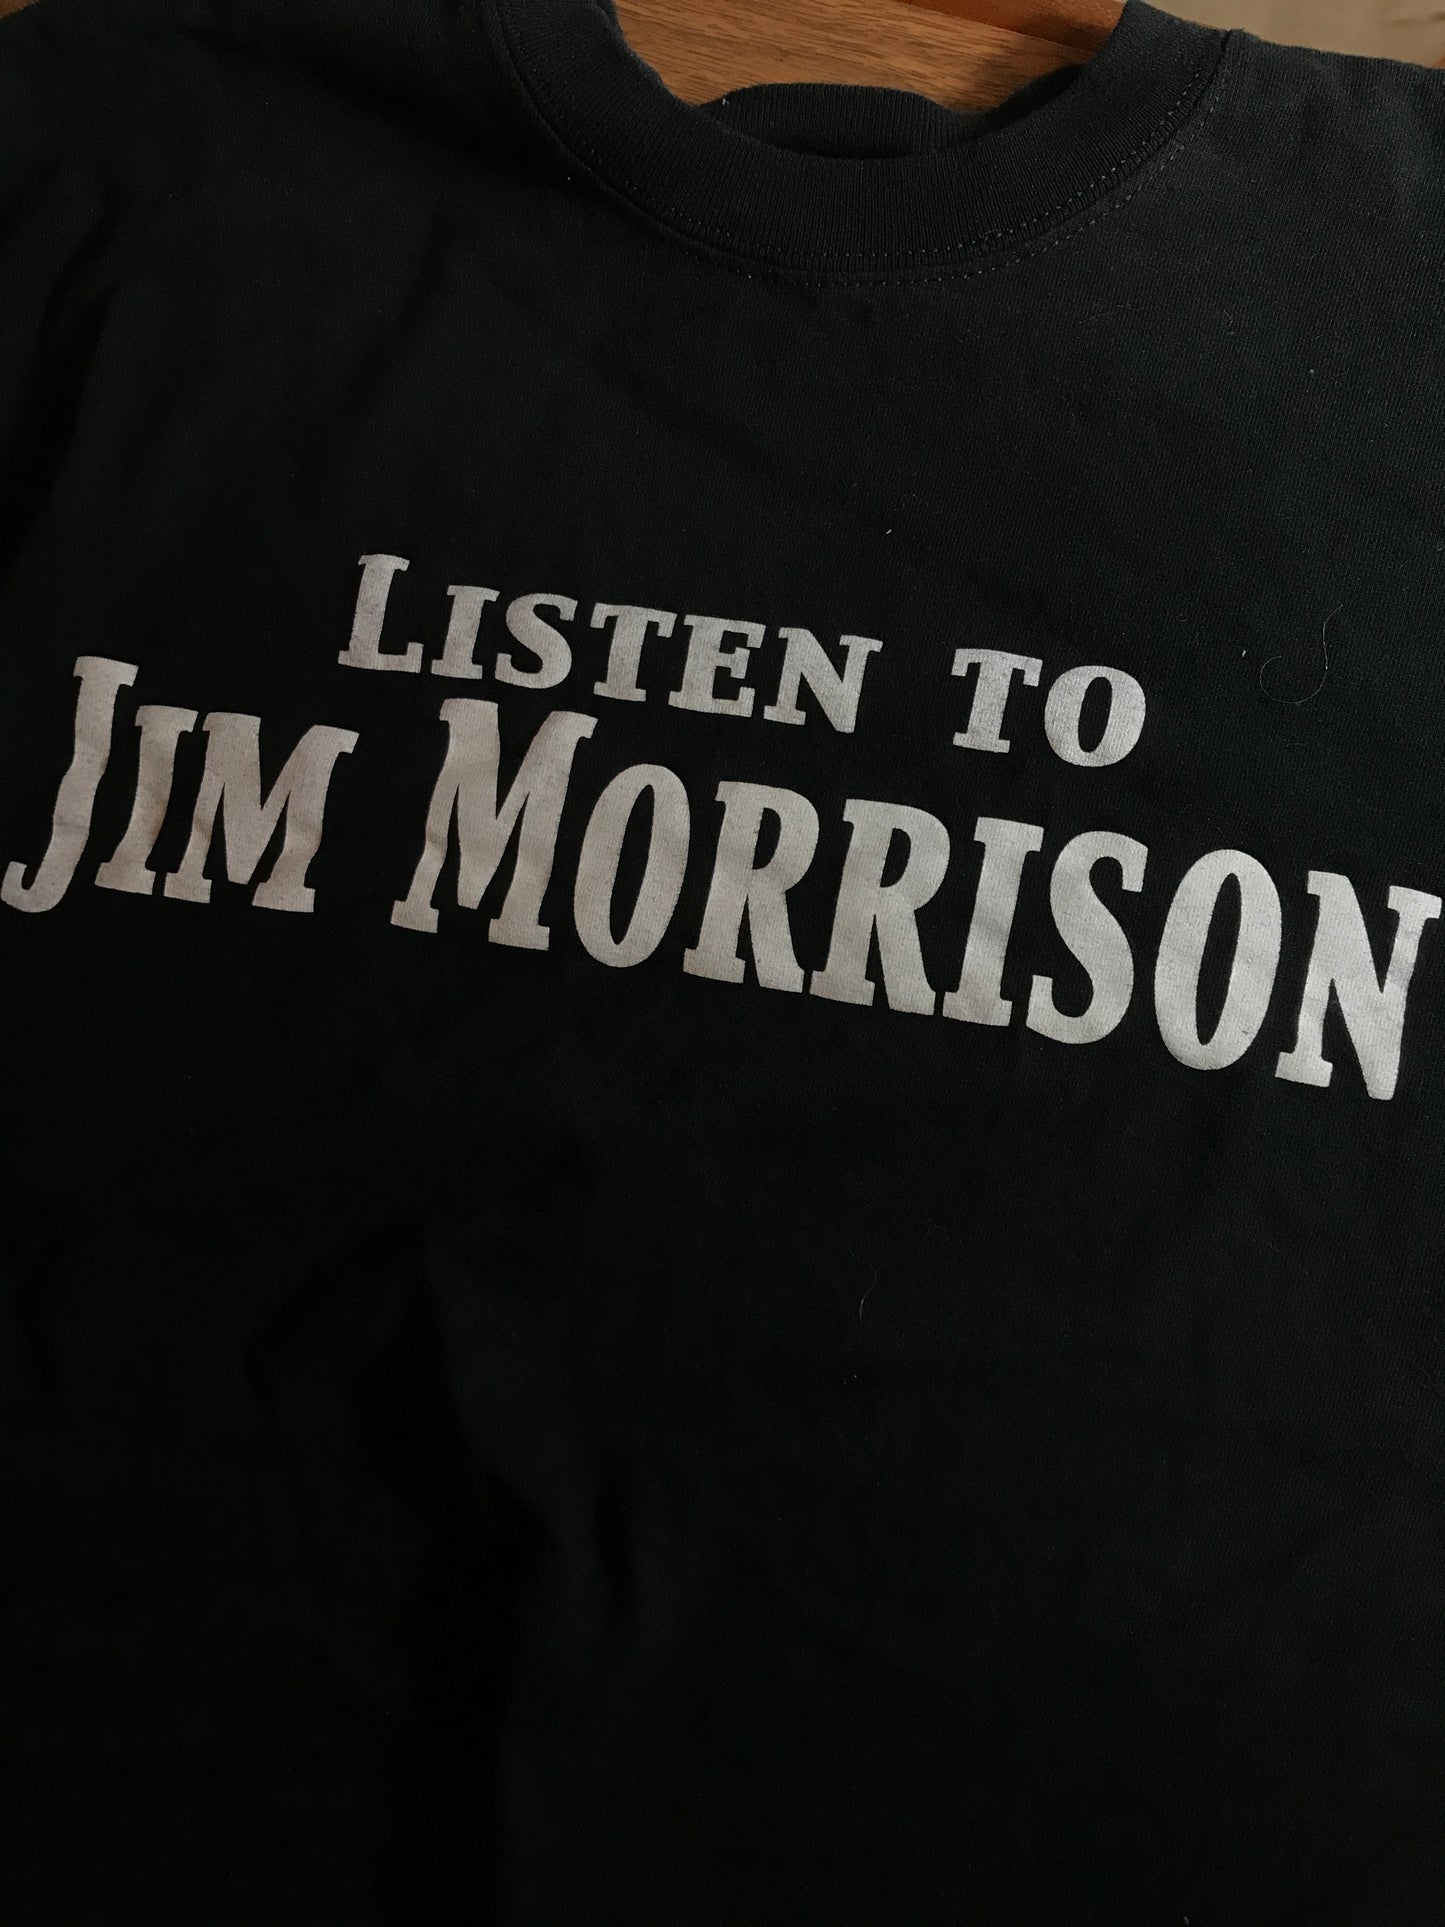 Listen to Jim Morrison Vintage T-shirt